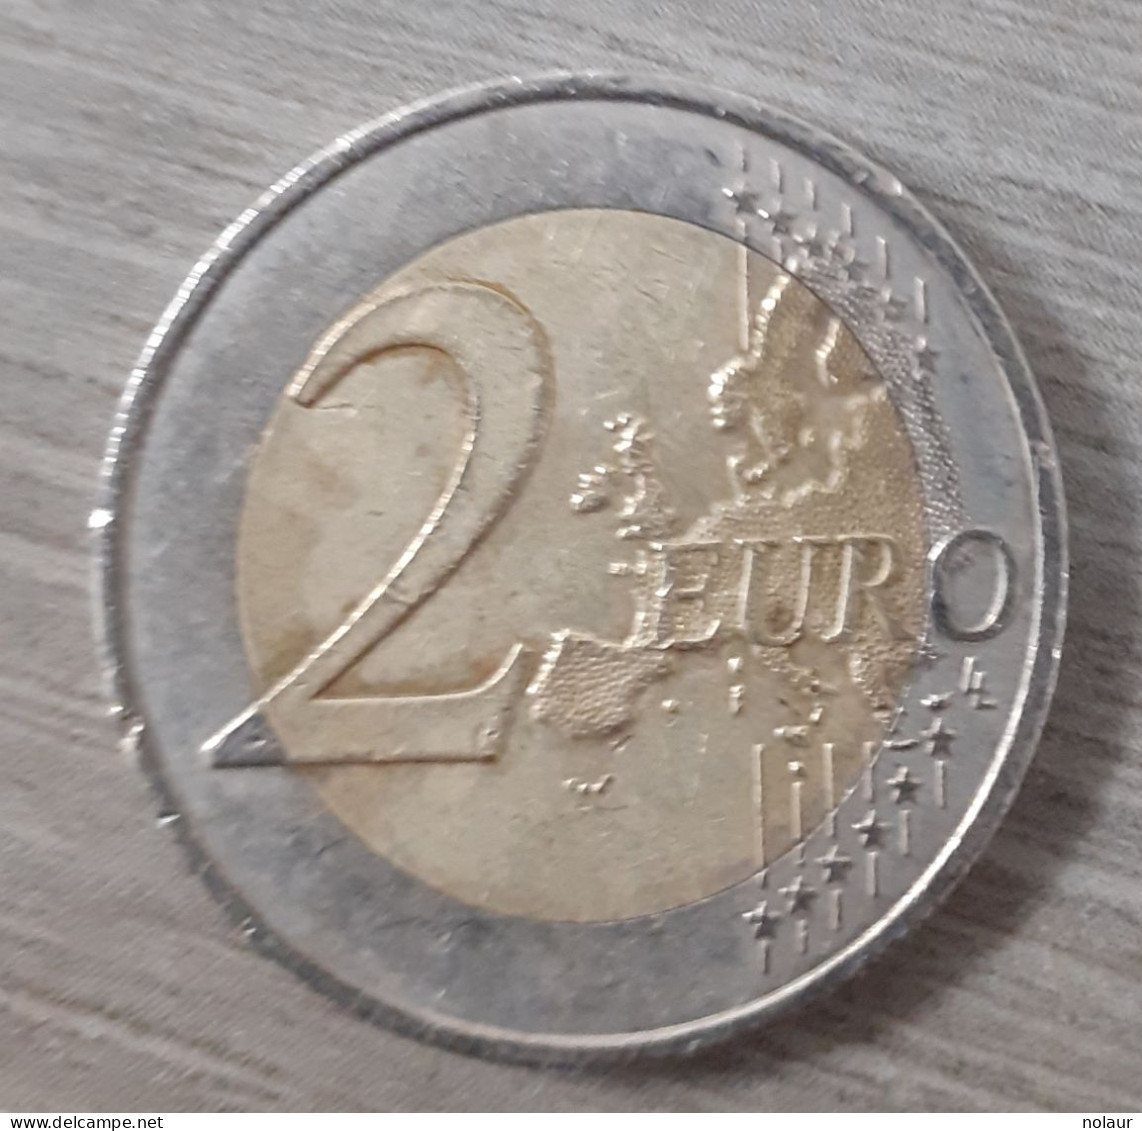 PIECE COMMEMORATIVE 2 EUROS - François Miterrand - Frankreich